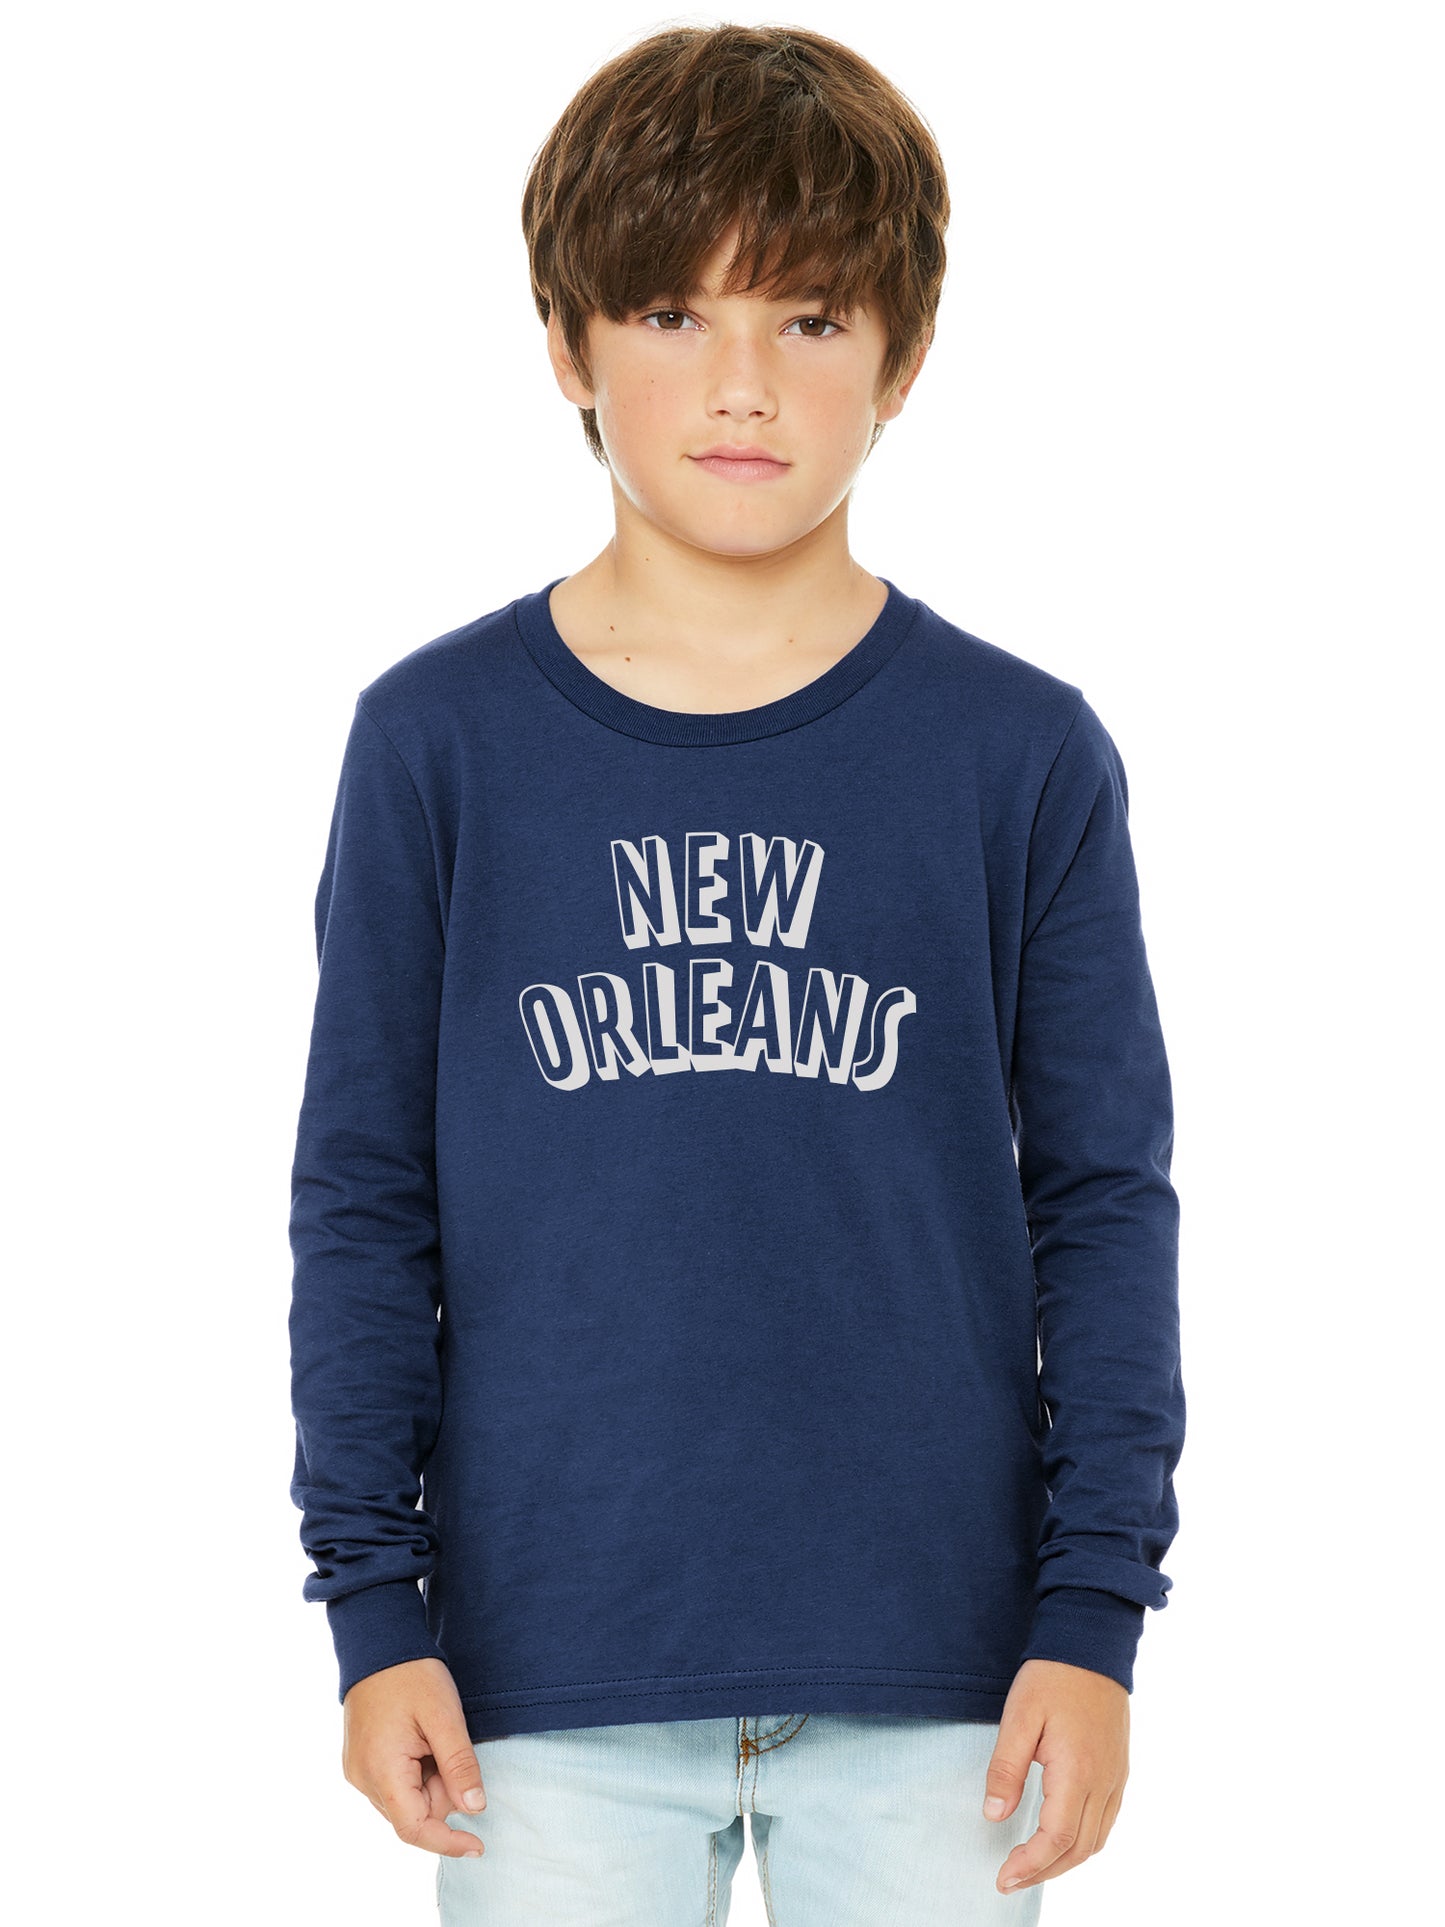 Daxton Youth Long Sleeve New Orleans Basic Tshirt